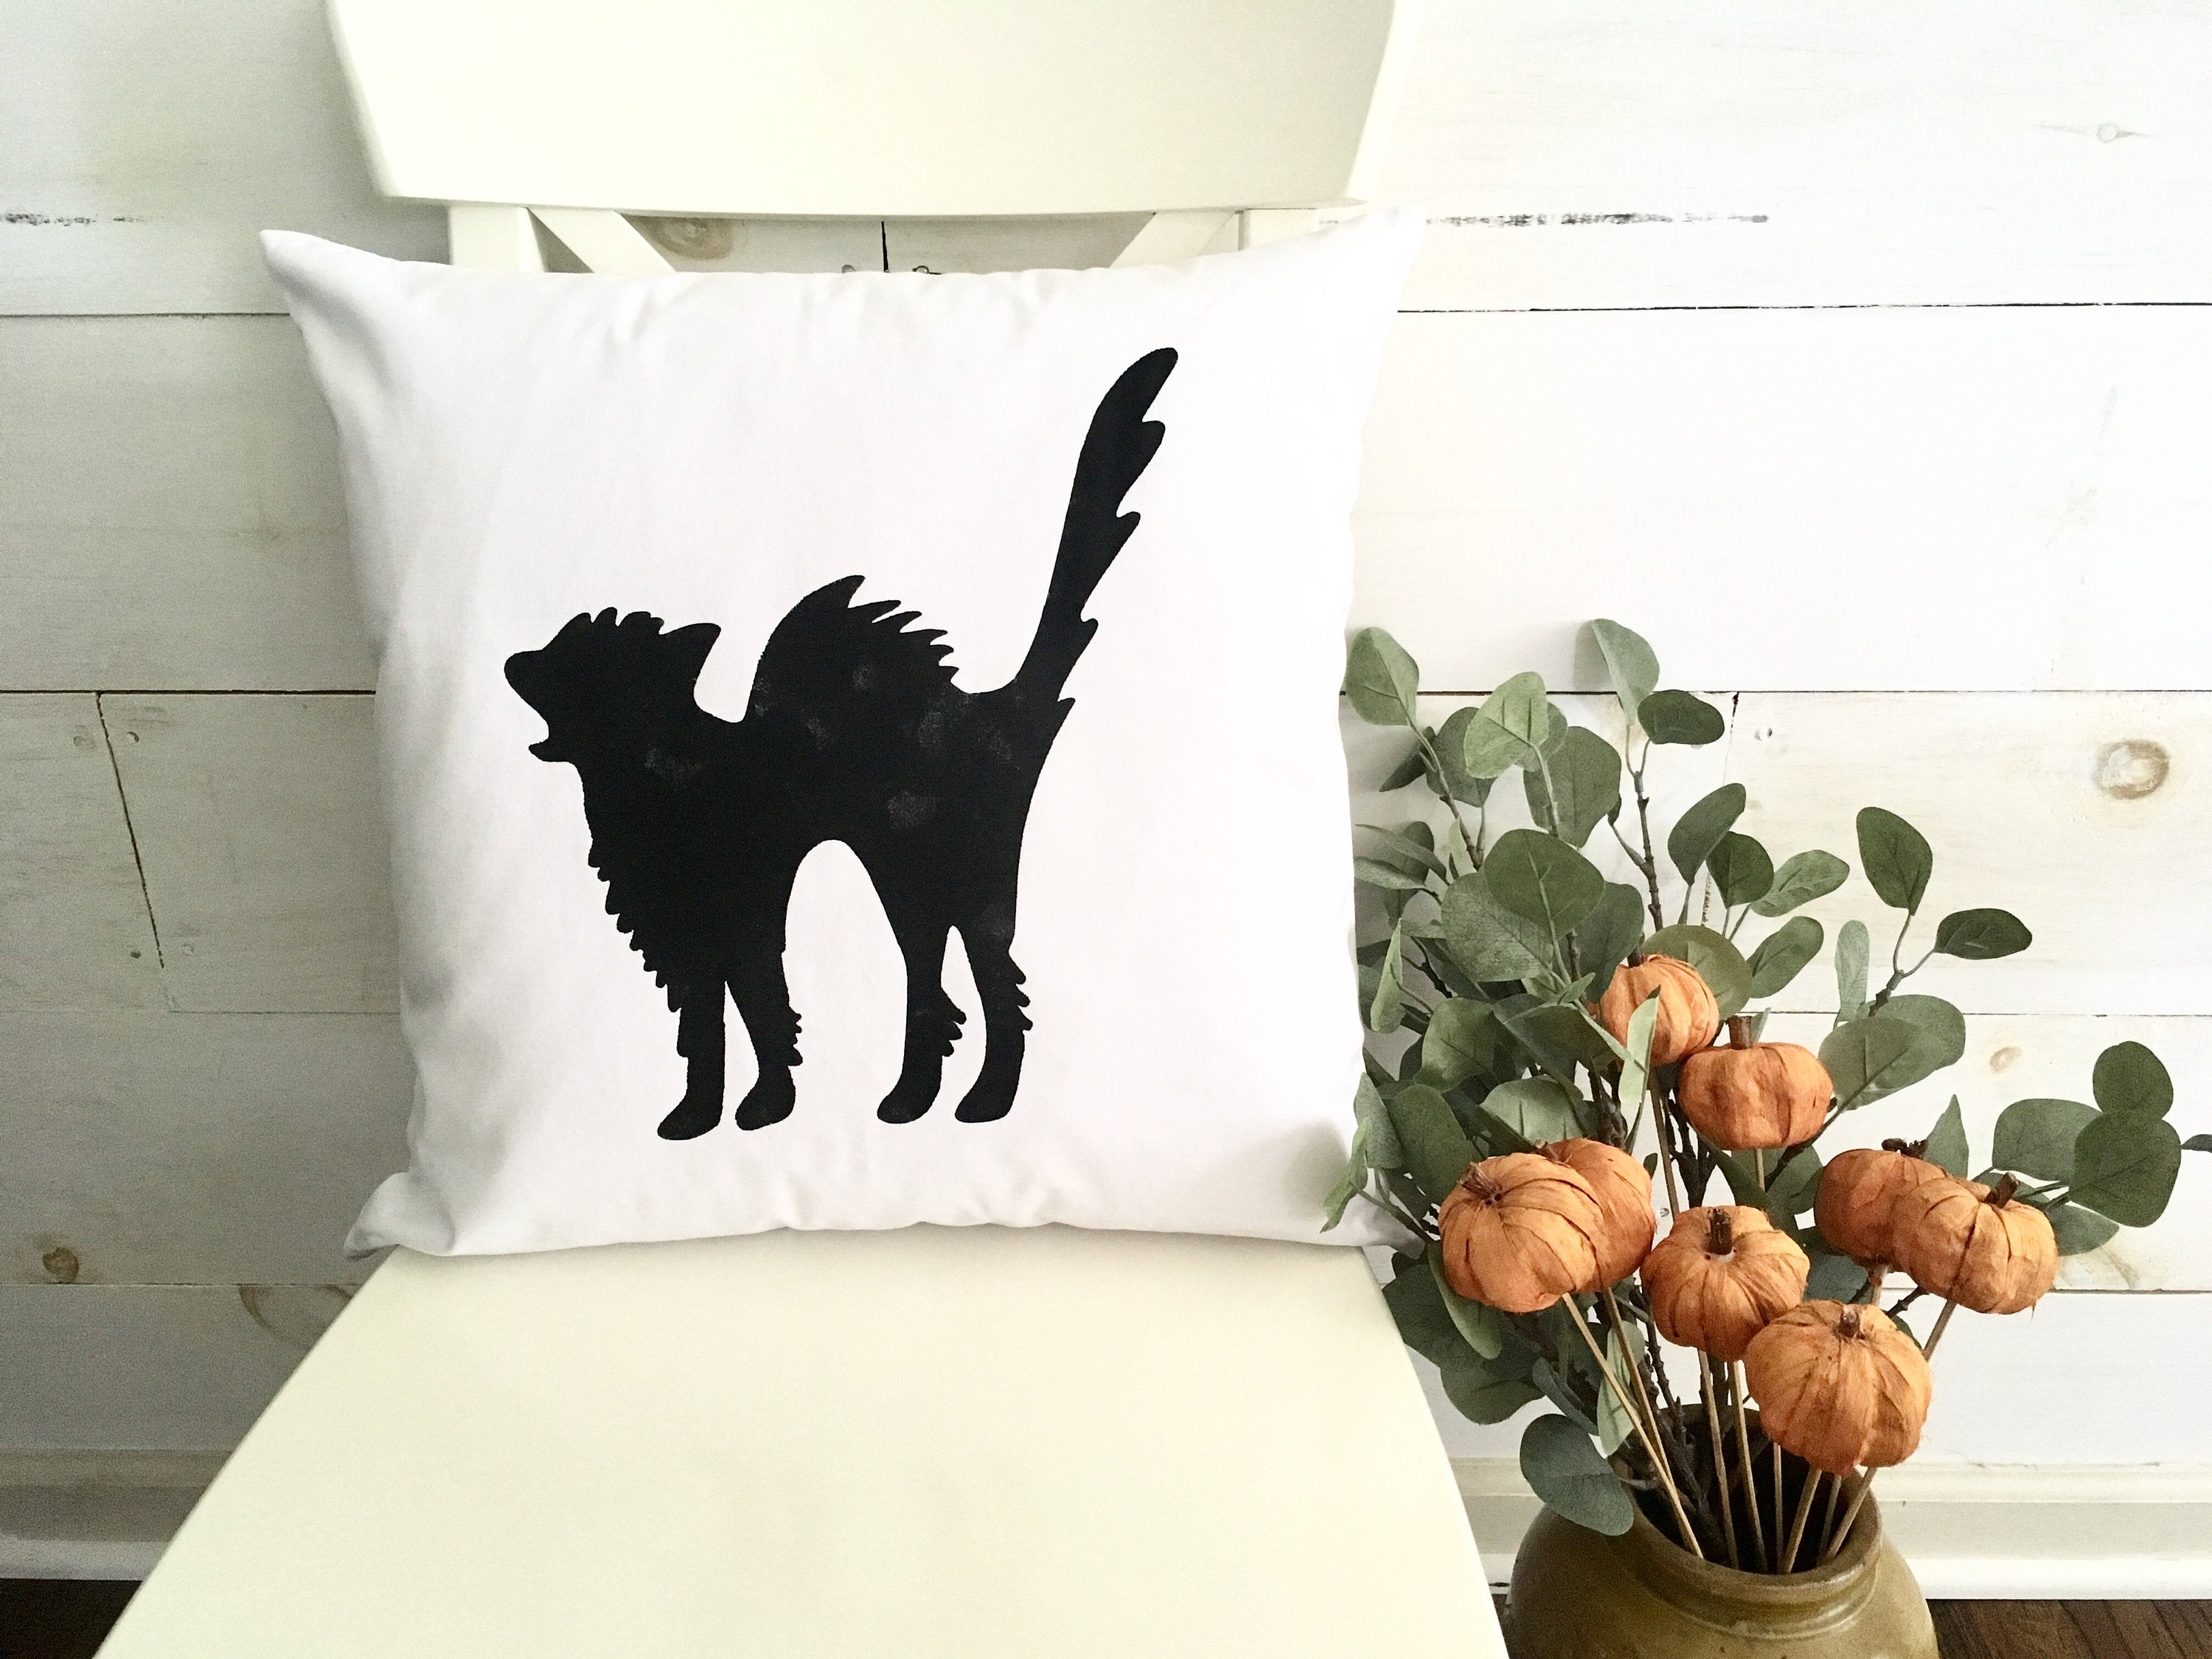 Black cat throw pillow cover